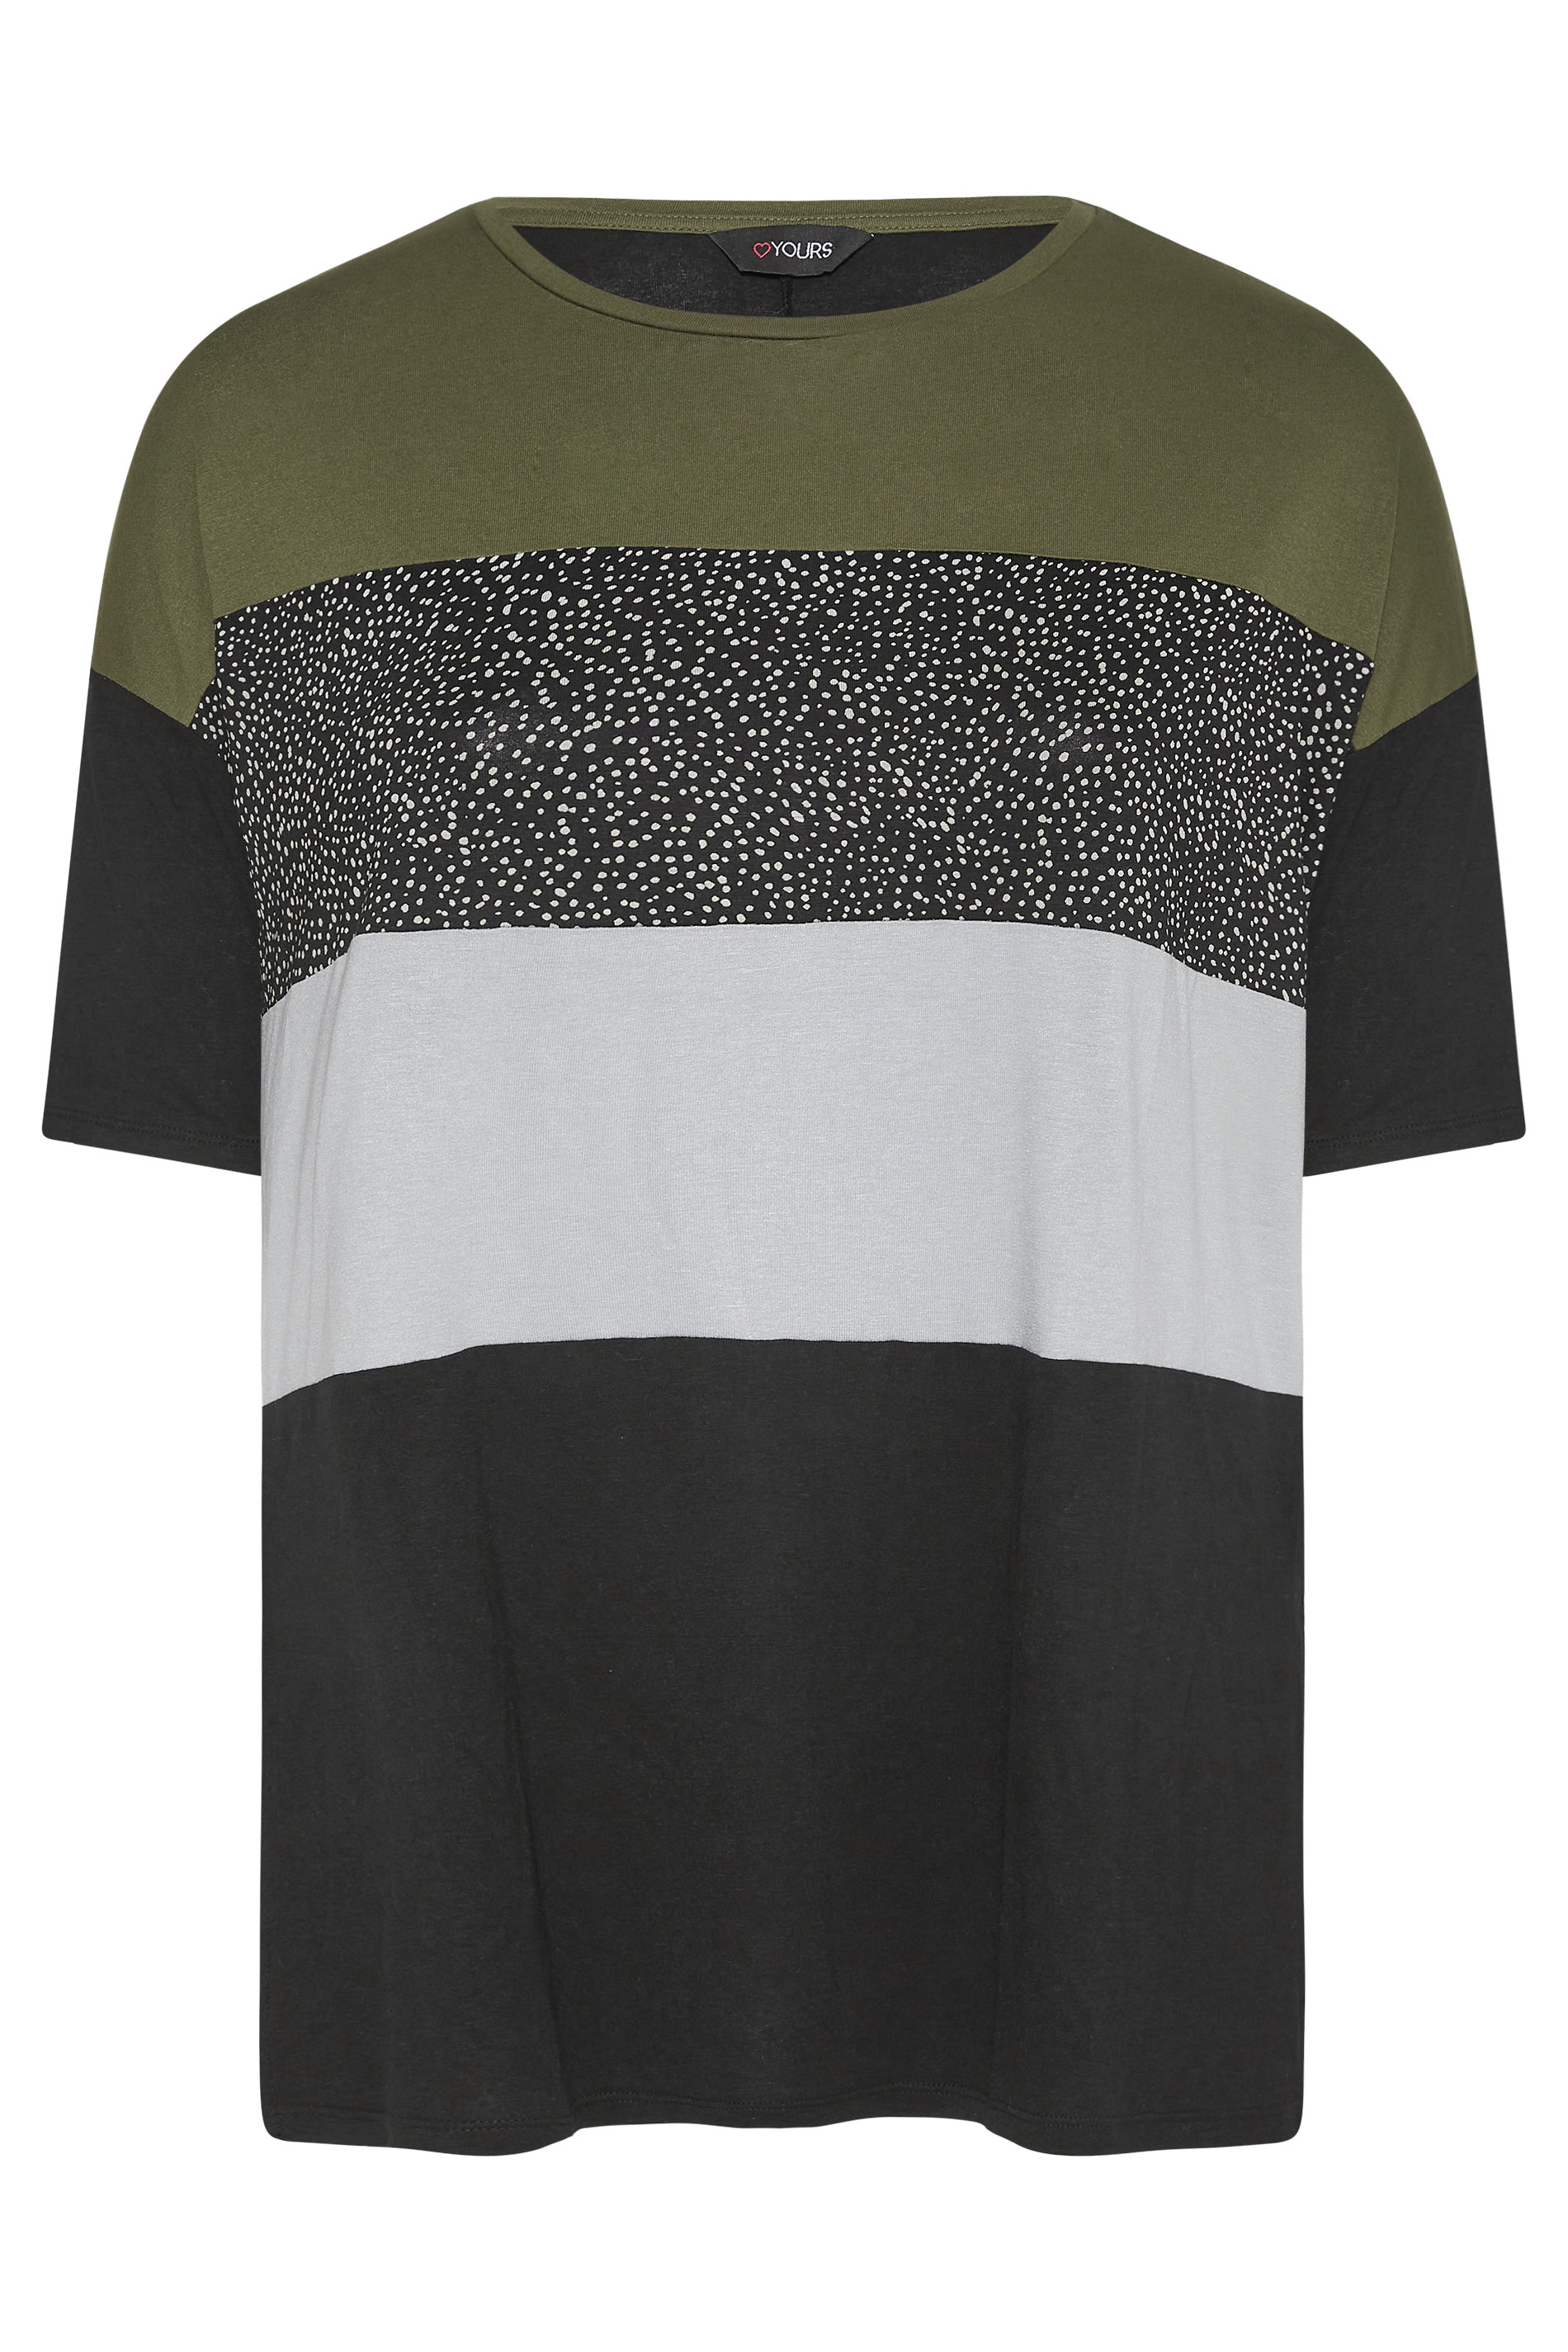 Grande taille  Tops Grande taille  T-Shirts | Top Vert Kaki & Léopard - MM65162